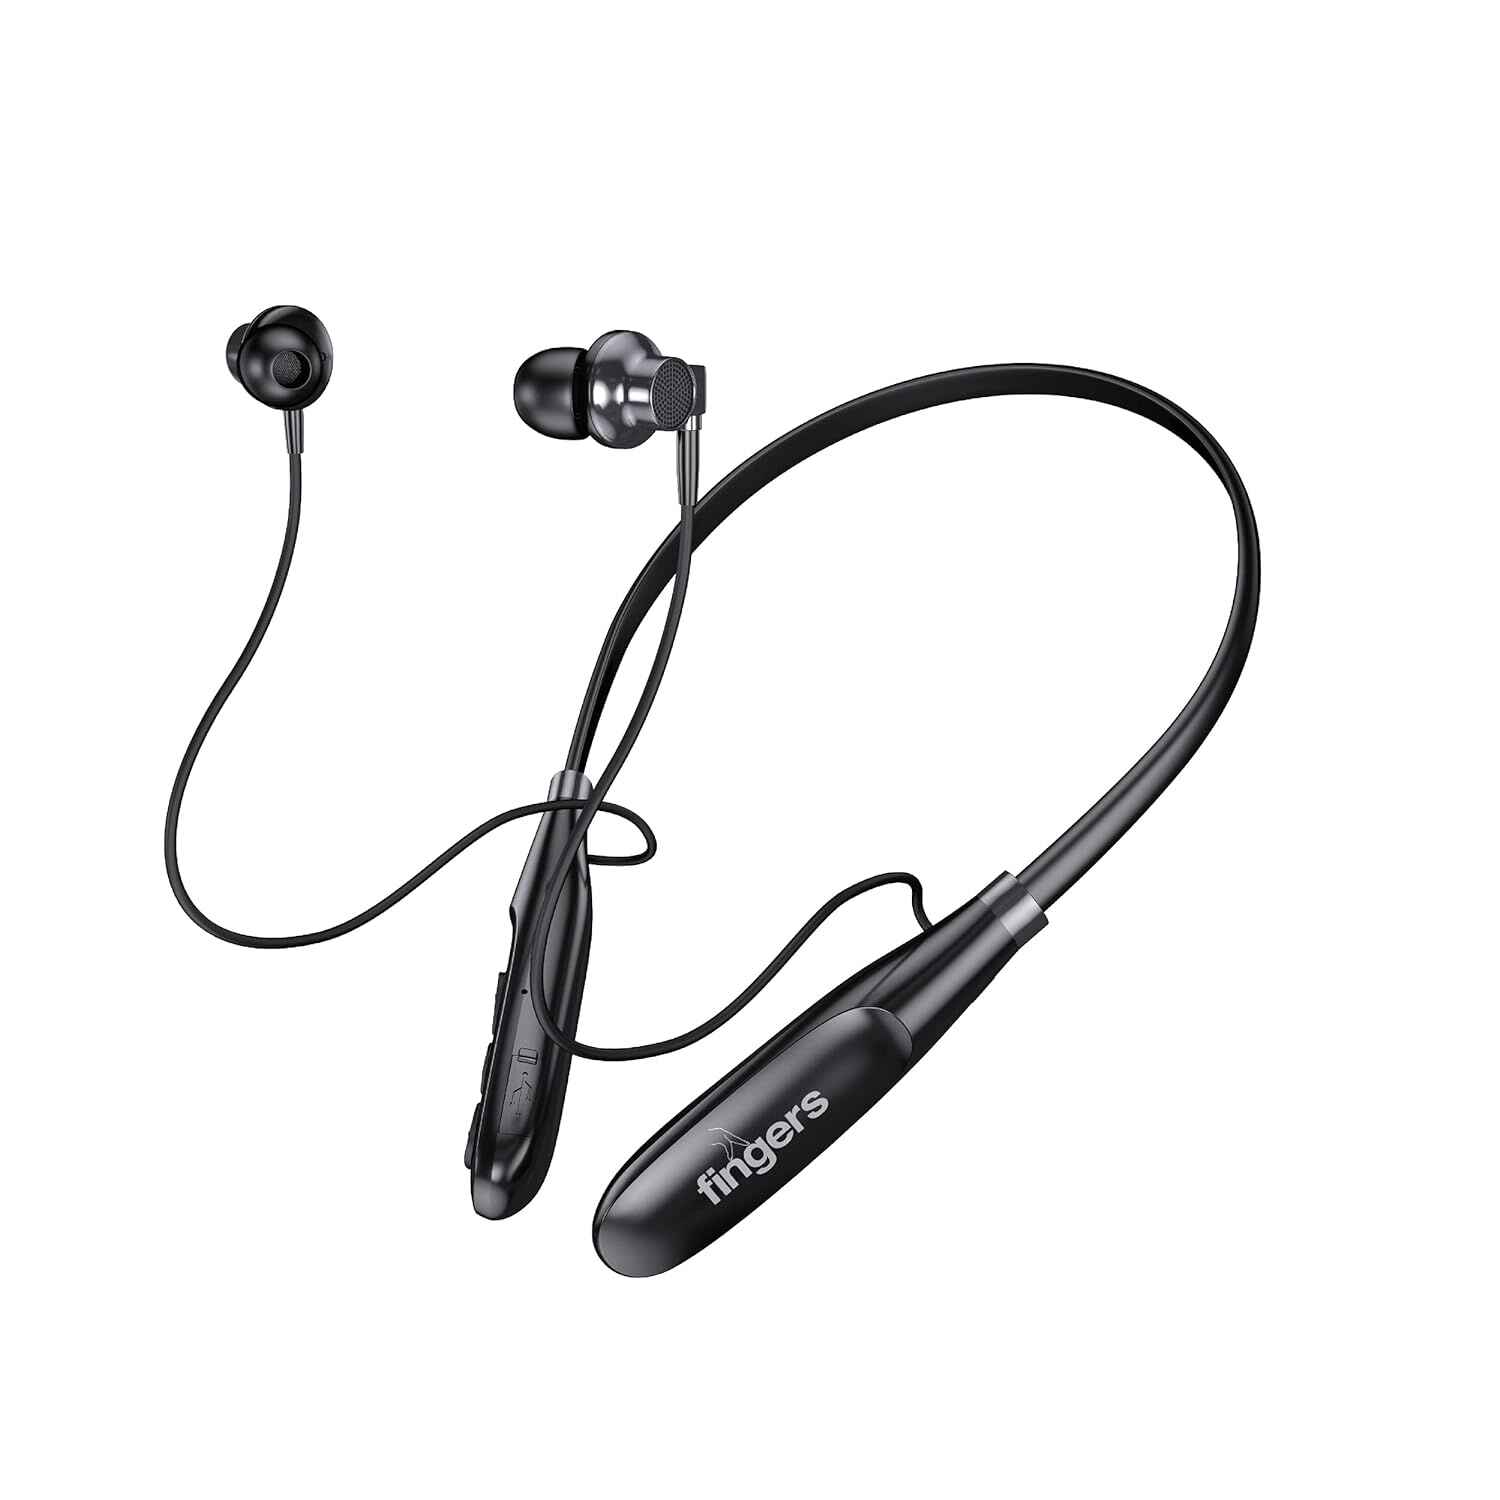 FINGERS 30 Hr Bluetooth Wireless in Ear Neckband Earphones with Built-in Mic (Black)